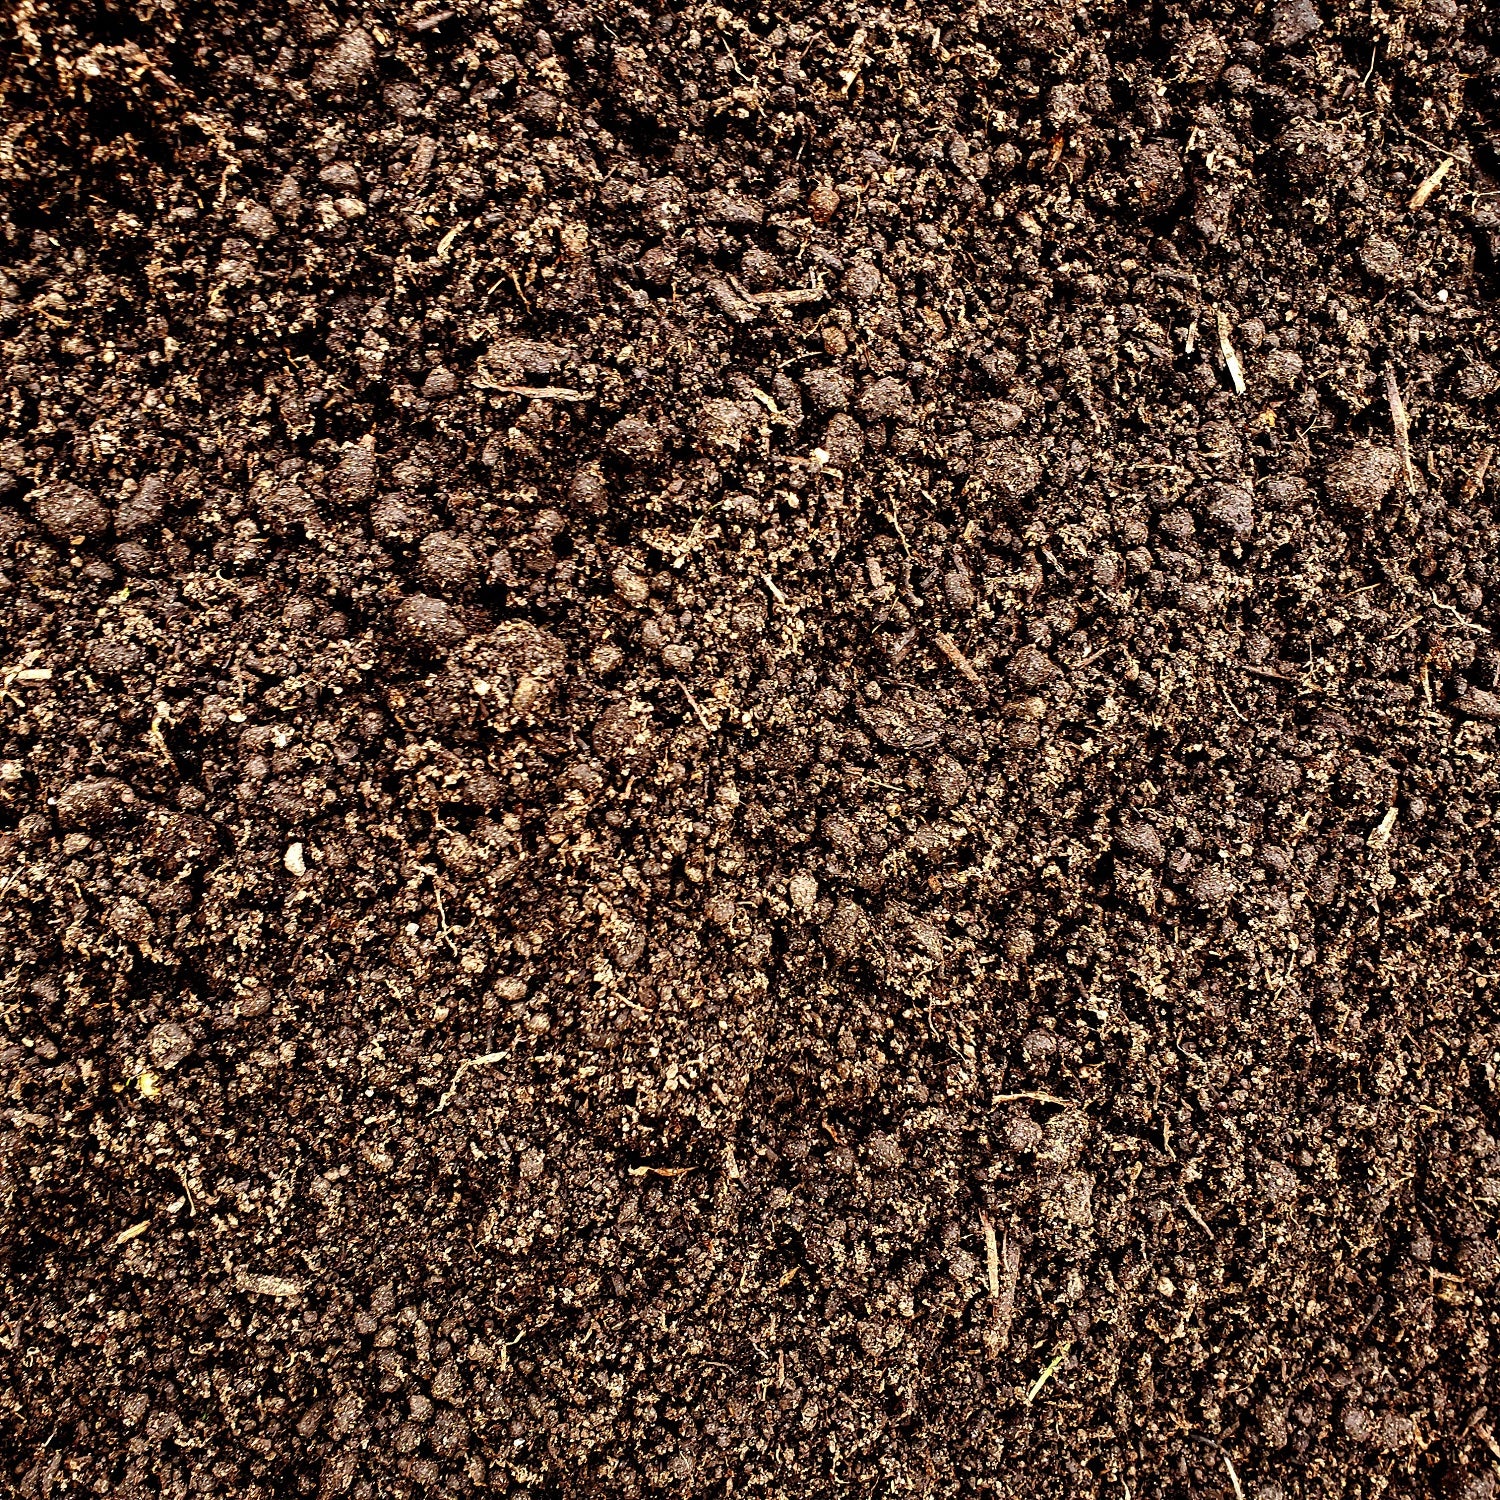 Soil & Mulch